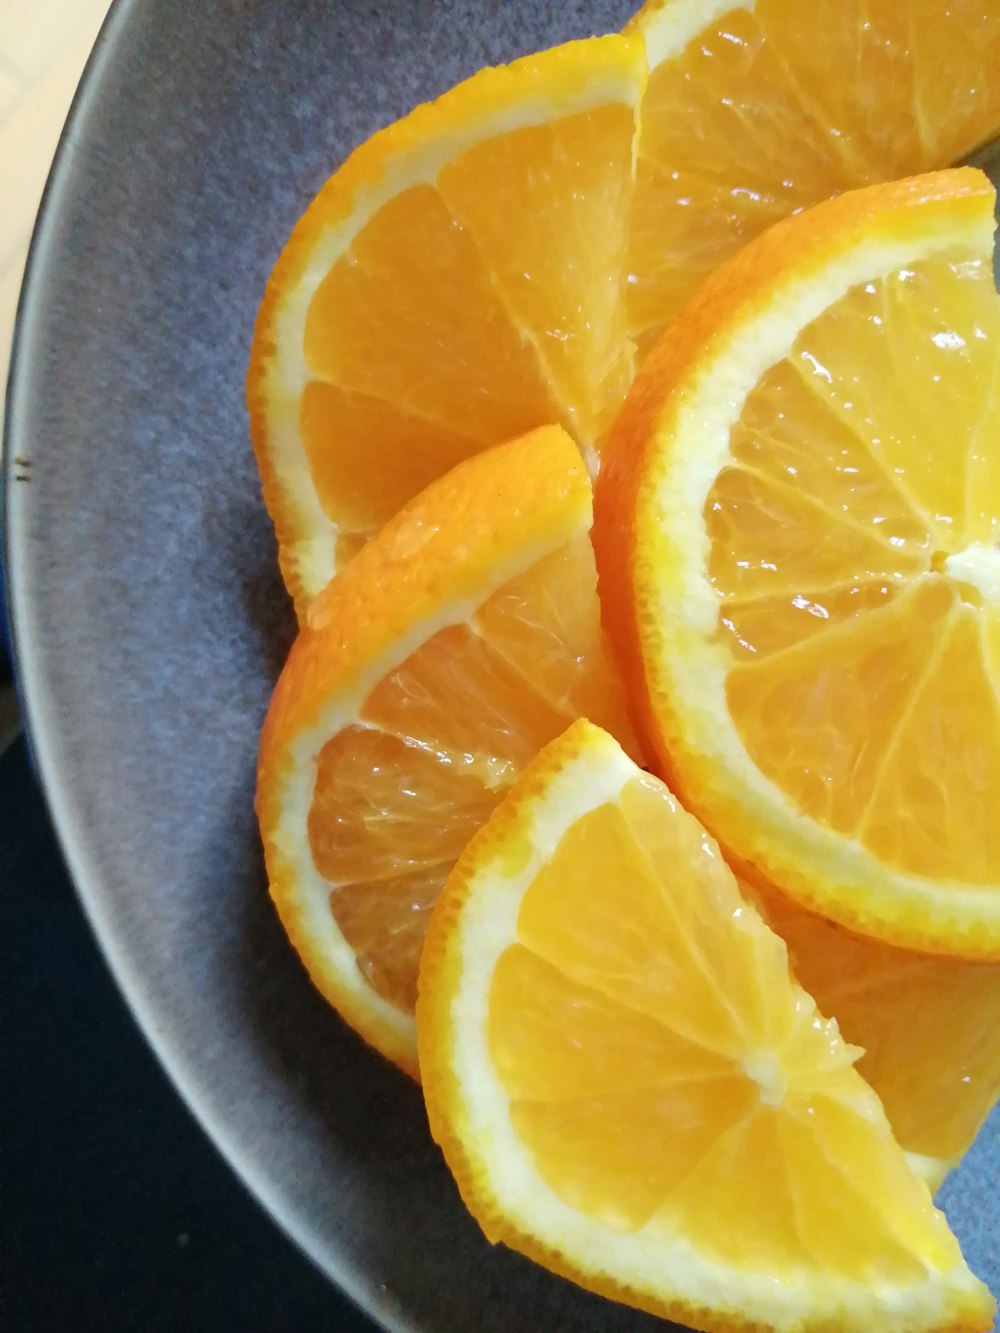 sliced orange fruit on gray round plate